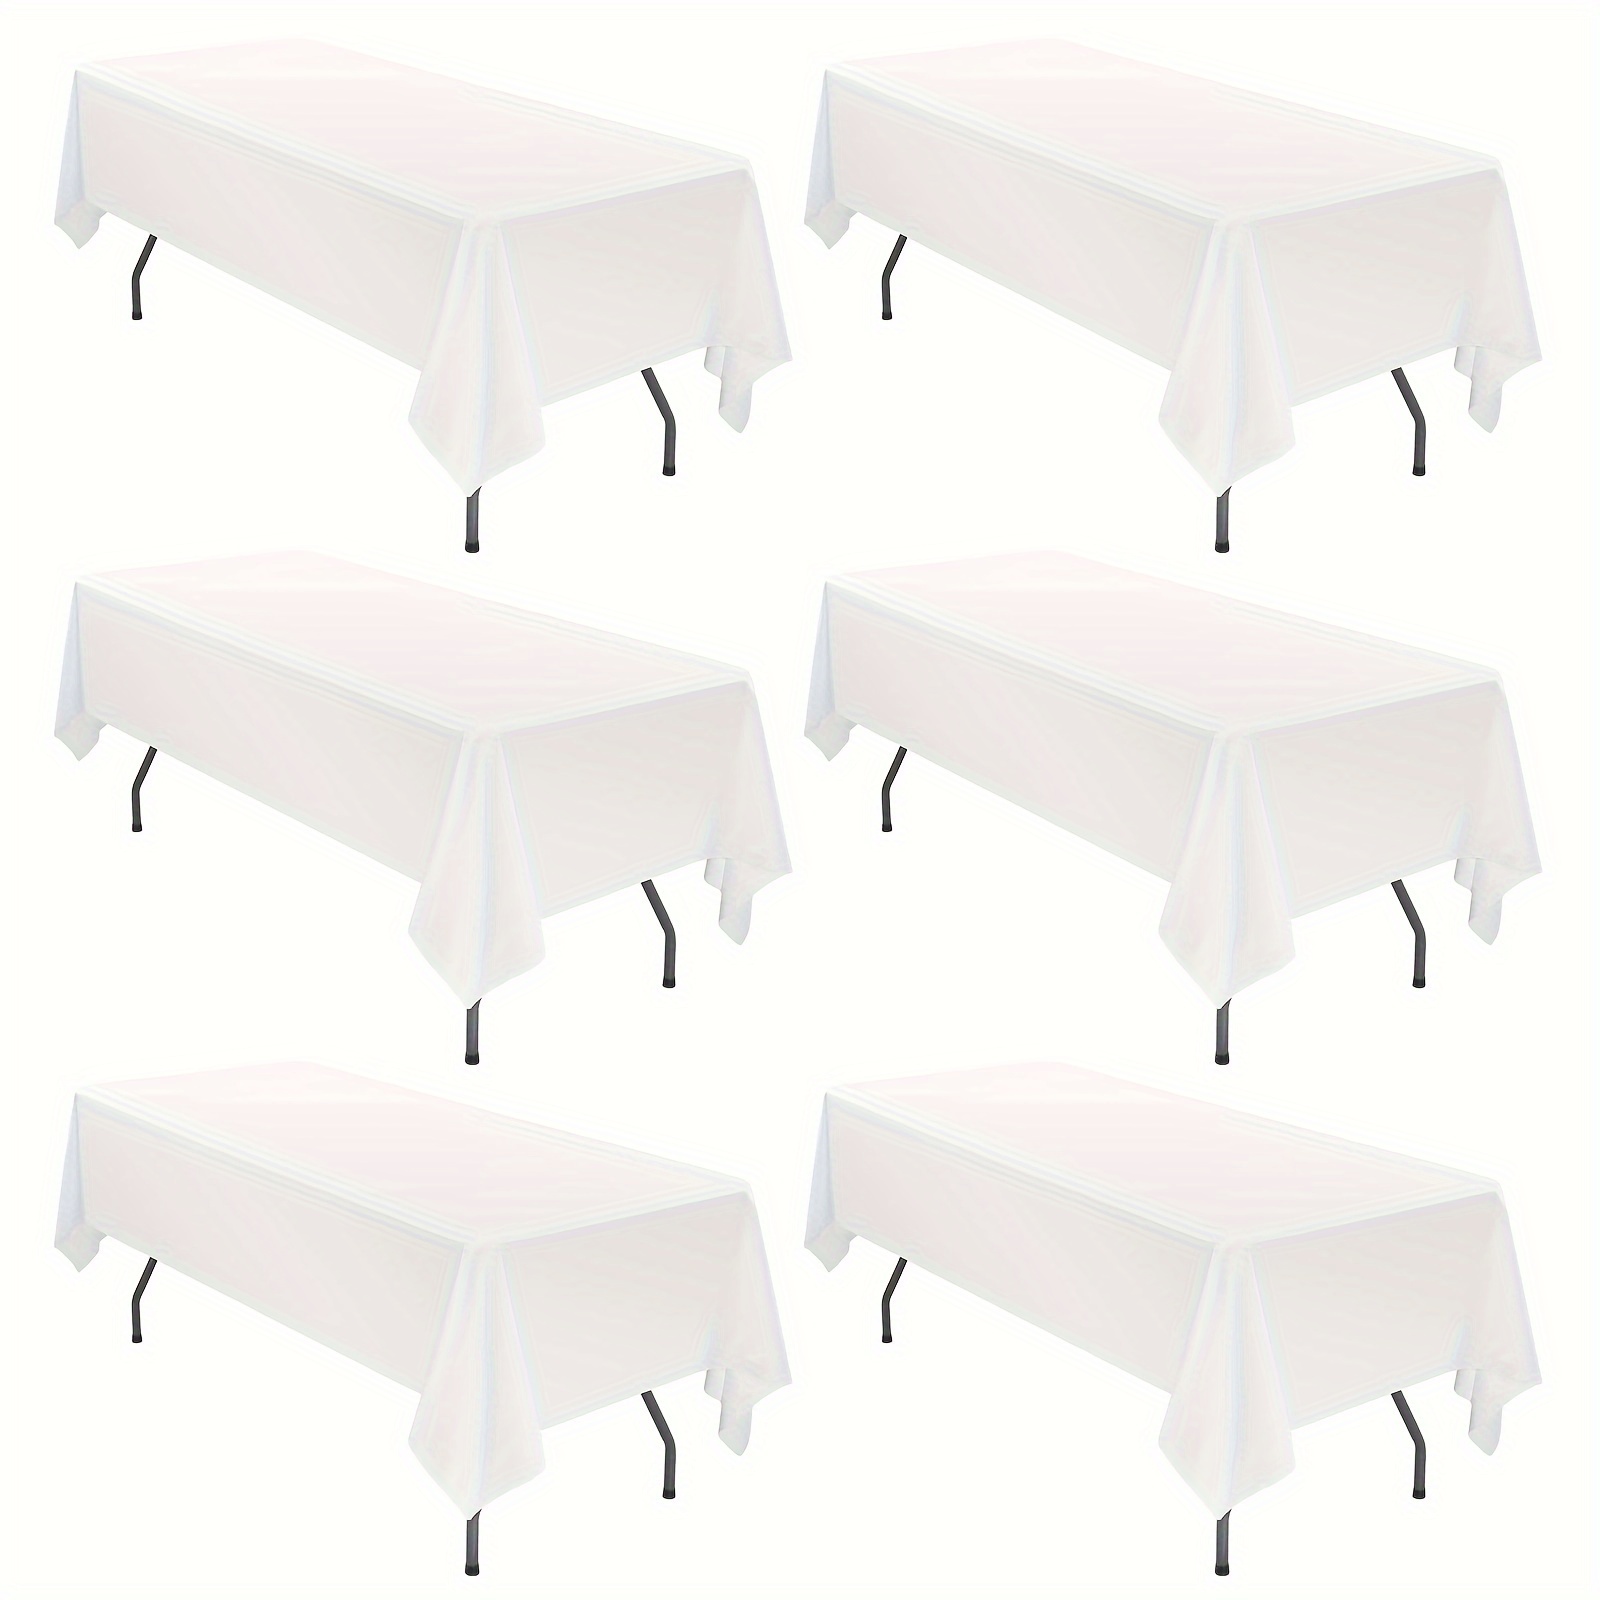 Paquete de 12 manteles para mesas rectangulares de 58 x 102 pulgadas,  manteles de poliéster para mesas rectangulares de 6 pies, resistentes a las